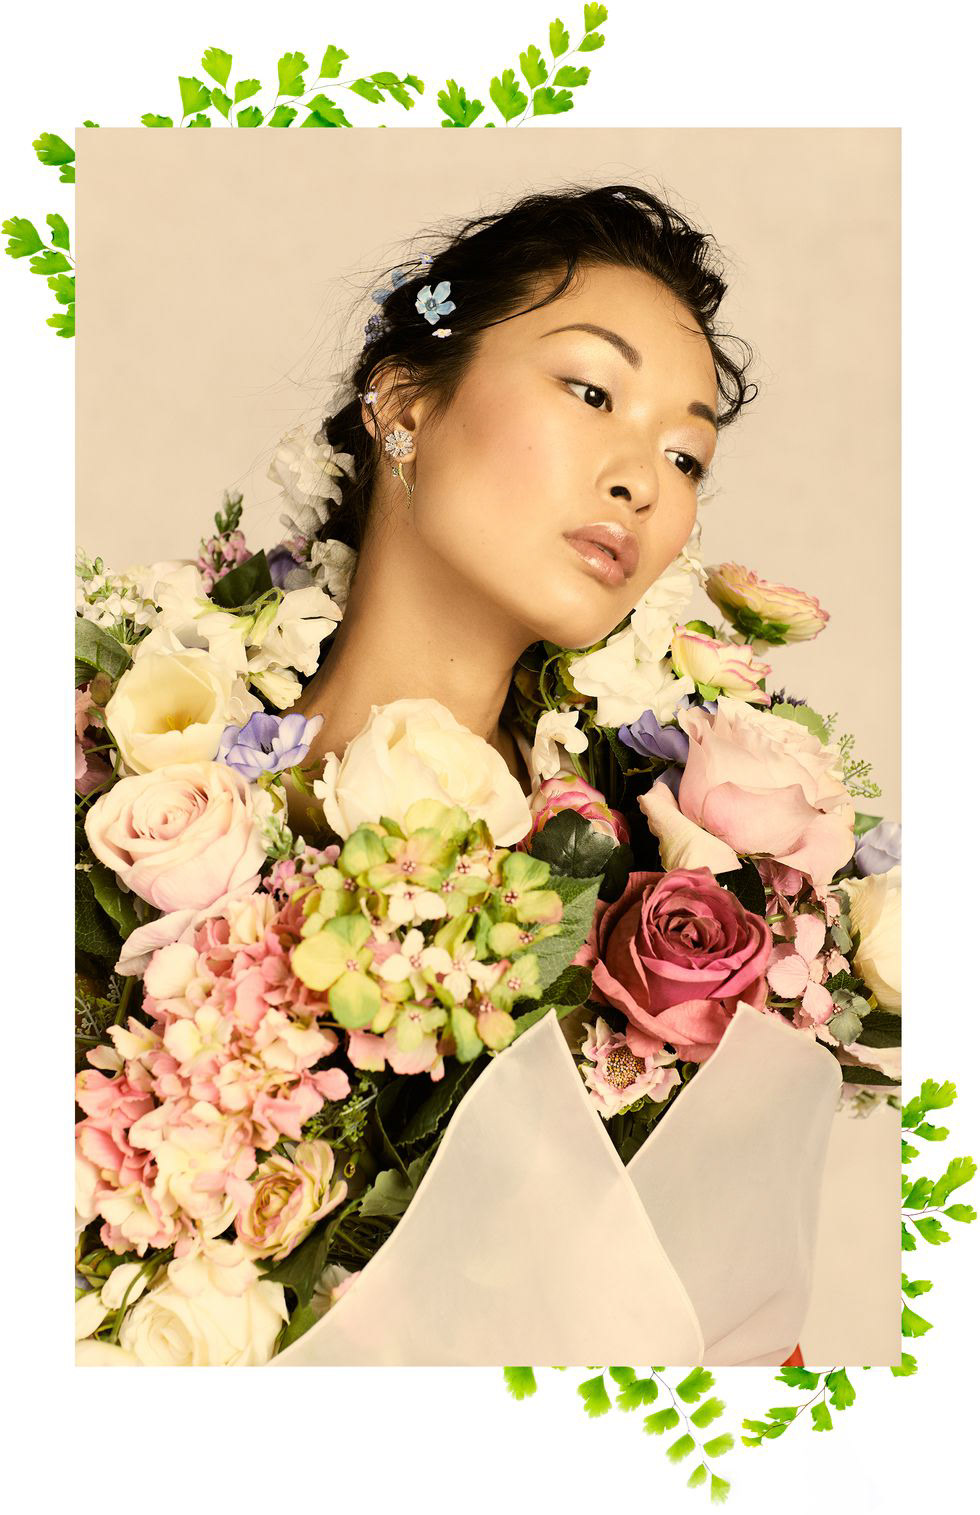 harper's bazaar fashion editorial flower crown headdress headpiece floral Floral design floral fashion